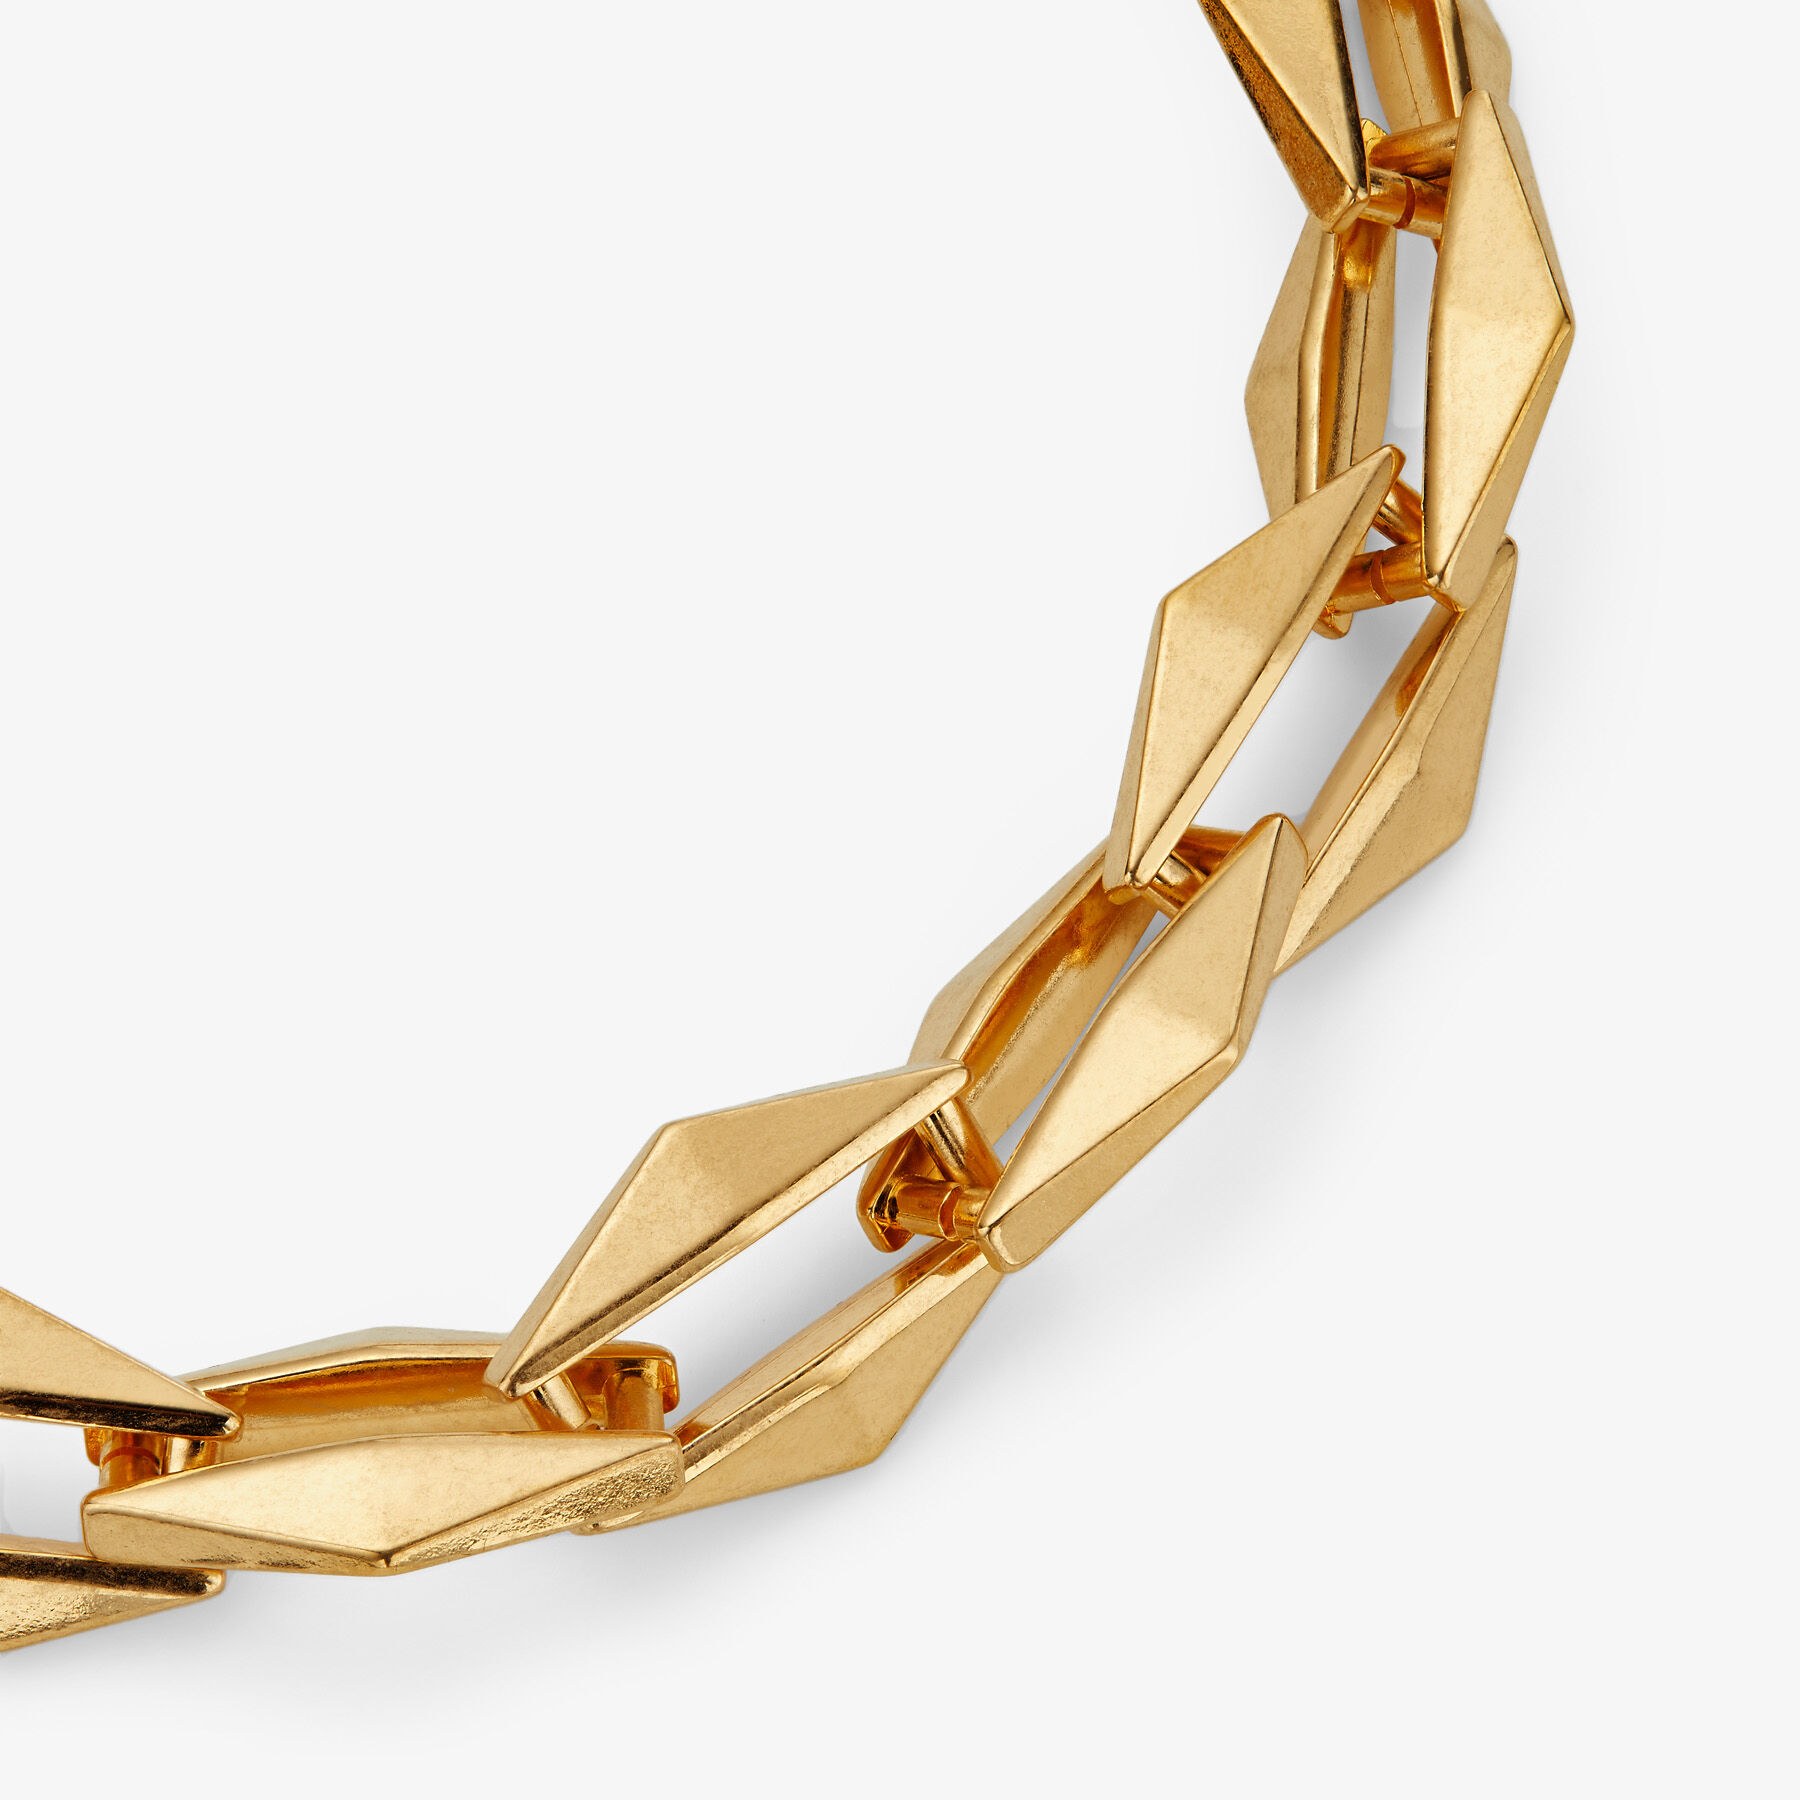 Gold and diamond necklace, 'Zip'  梵克雅寶 'Zip' 黃金及鑽石項鏈